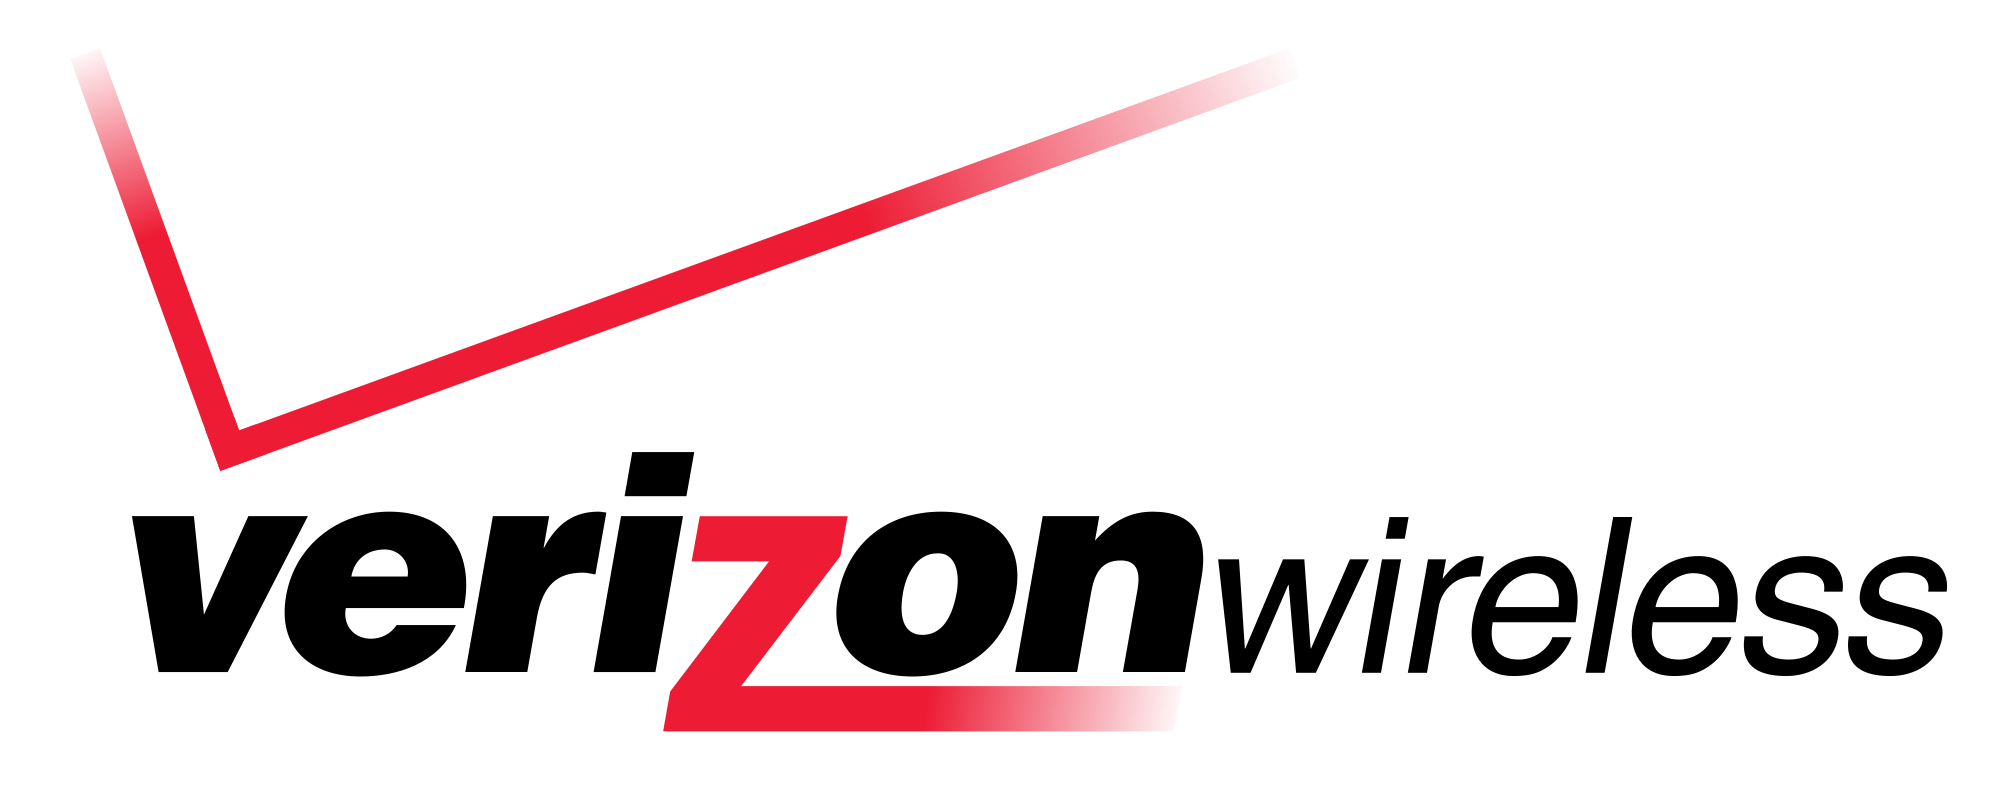 New Logo for Verizon by Penta